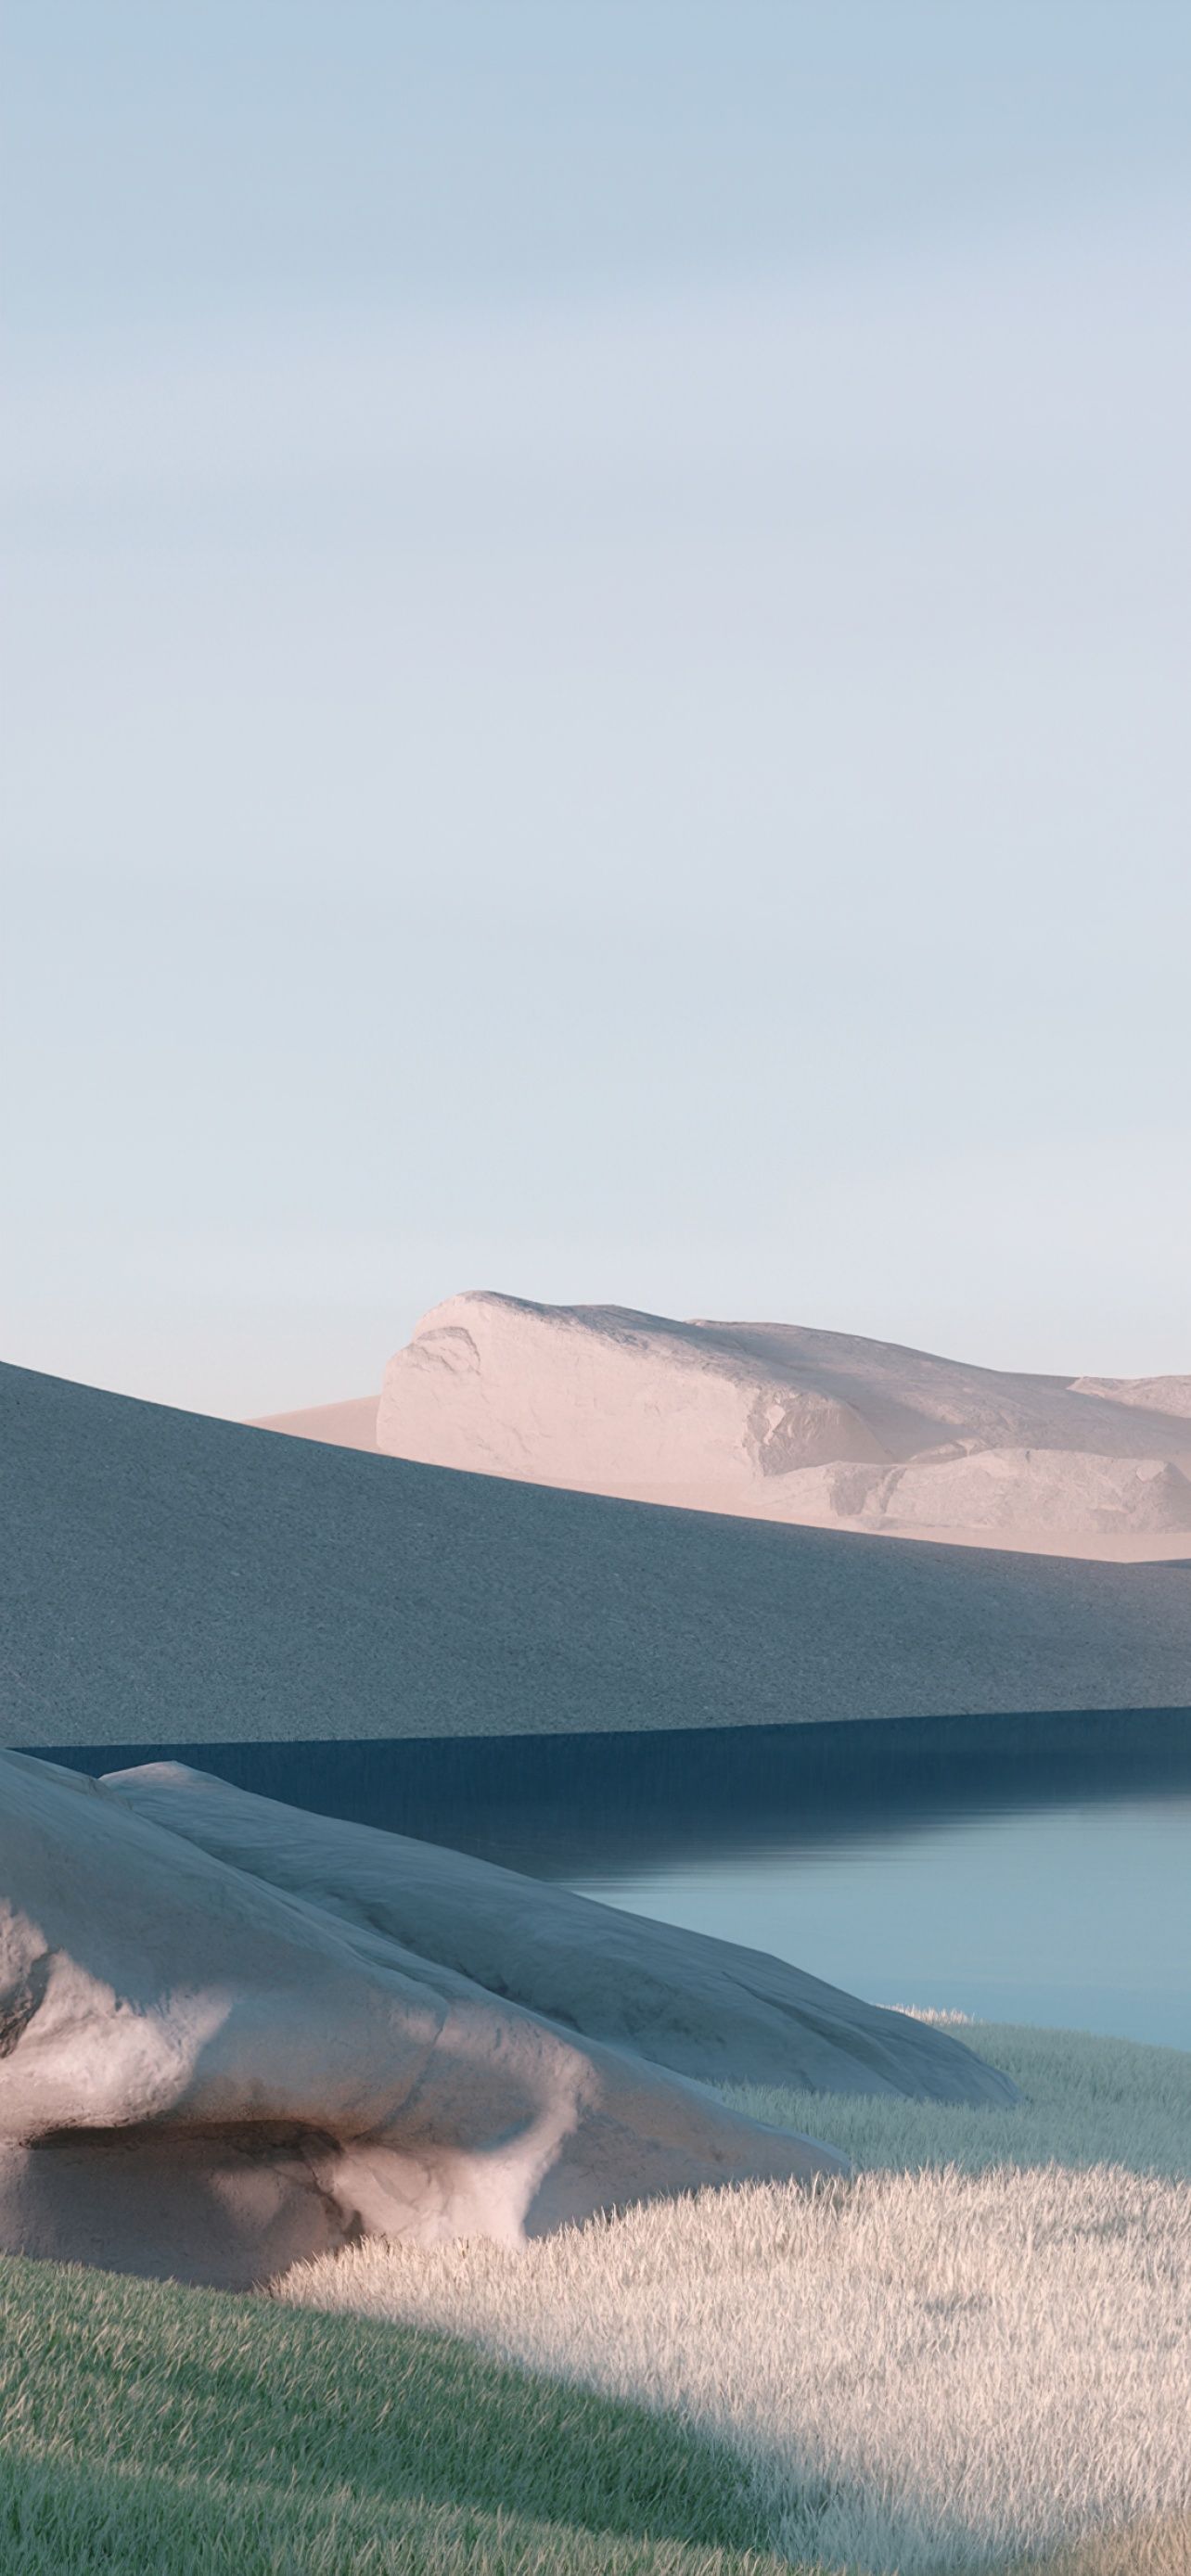 A serene image of a grassy hillside with a blue sky. - Desert